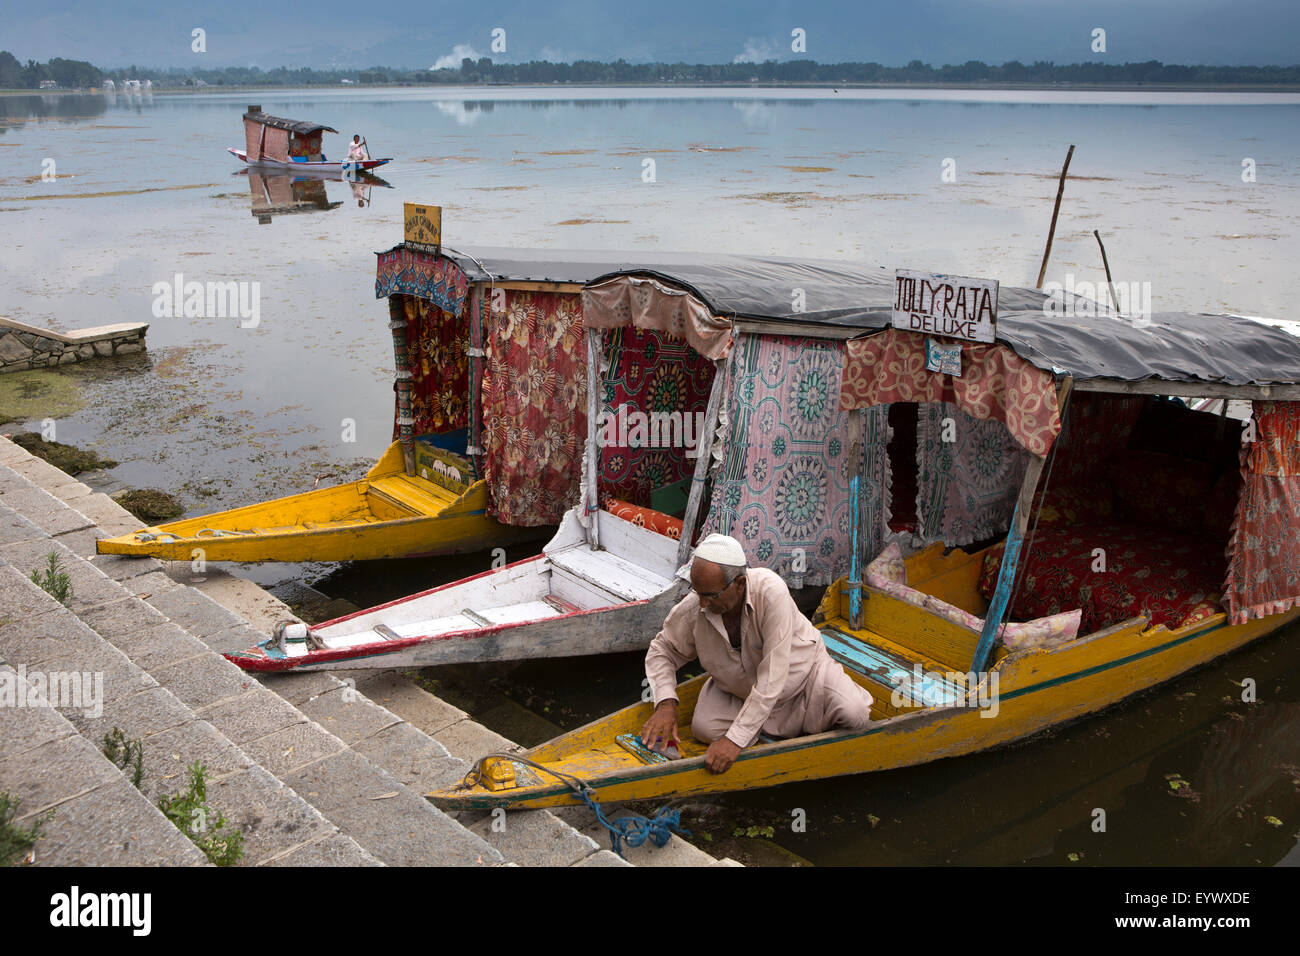 India, Jammu & Kashmir, Srinagar, Cachemira indio como turistas evitar, propietario de Jolly Raja, Dal Lago shikara, limpieza de barco-taxi en ausencia de crédito de los clientes: Neil McAllister/Alamy Live News Foto de stock